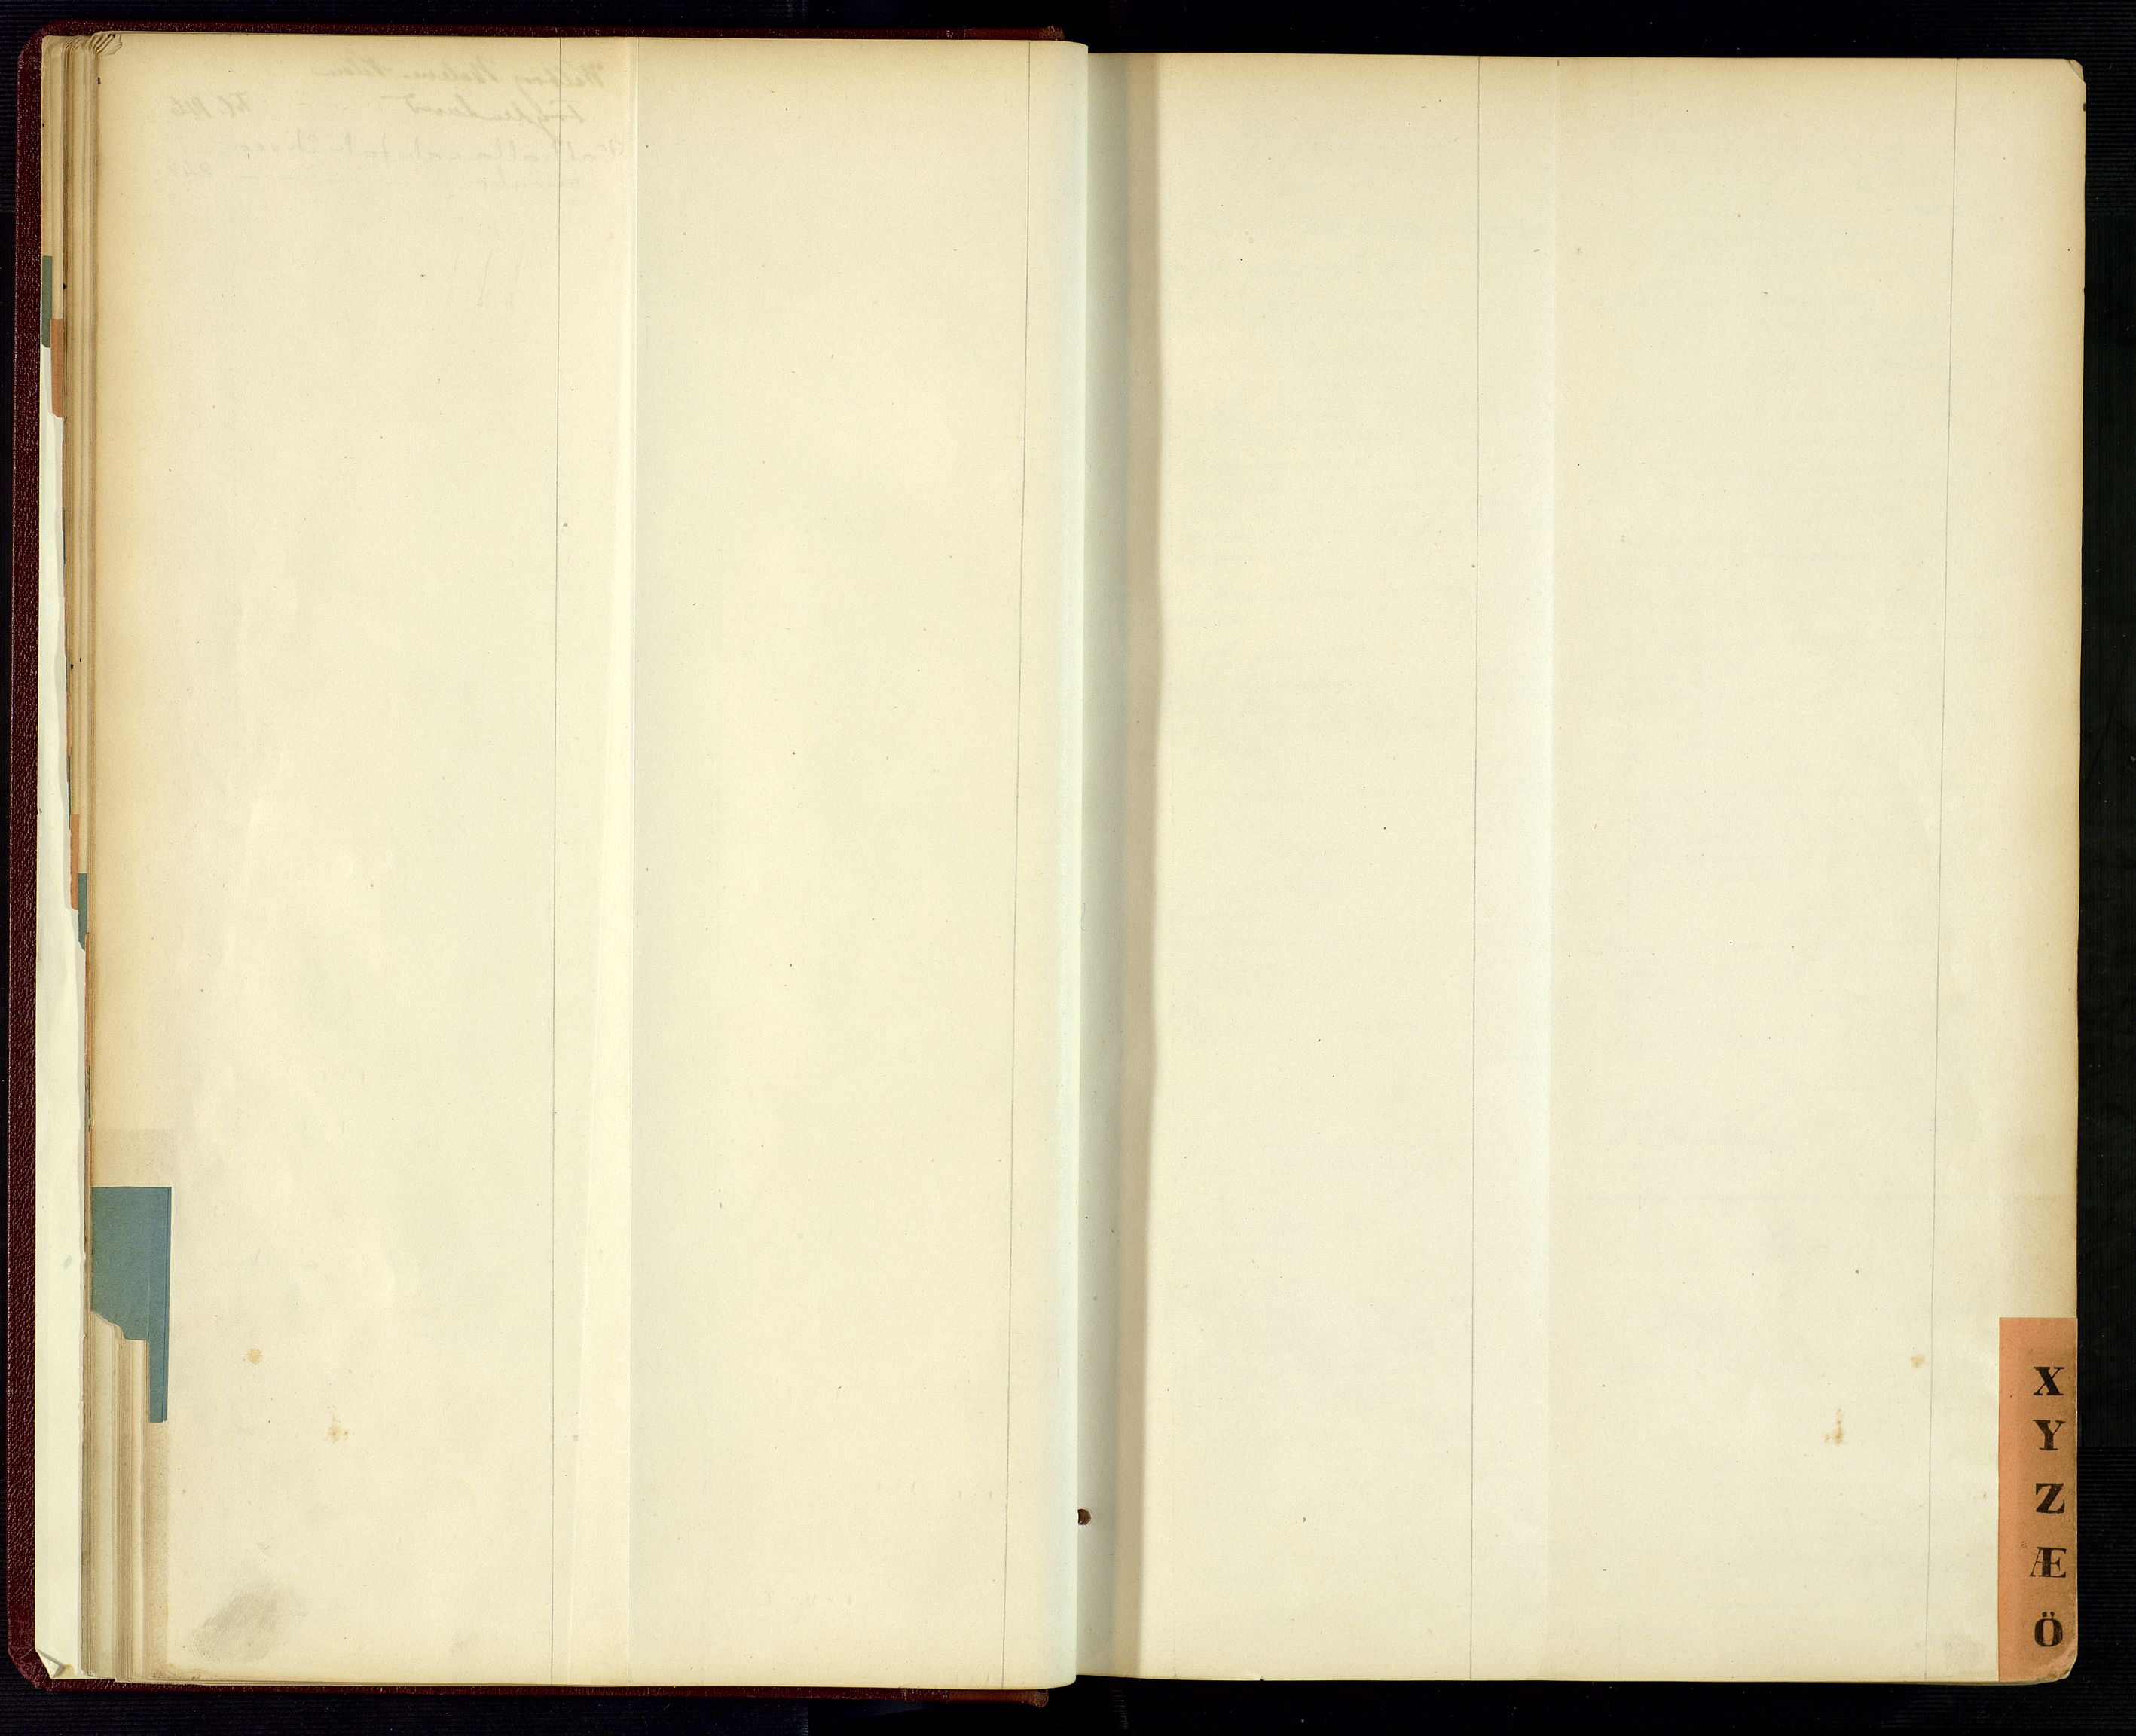 Torridal sorenskriveri, SAK/1221-0012/H/Hc/L0035: Skifteutlodningsprotokoll med navneregister nr. 4, 1888-1906